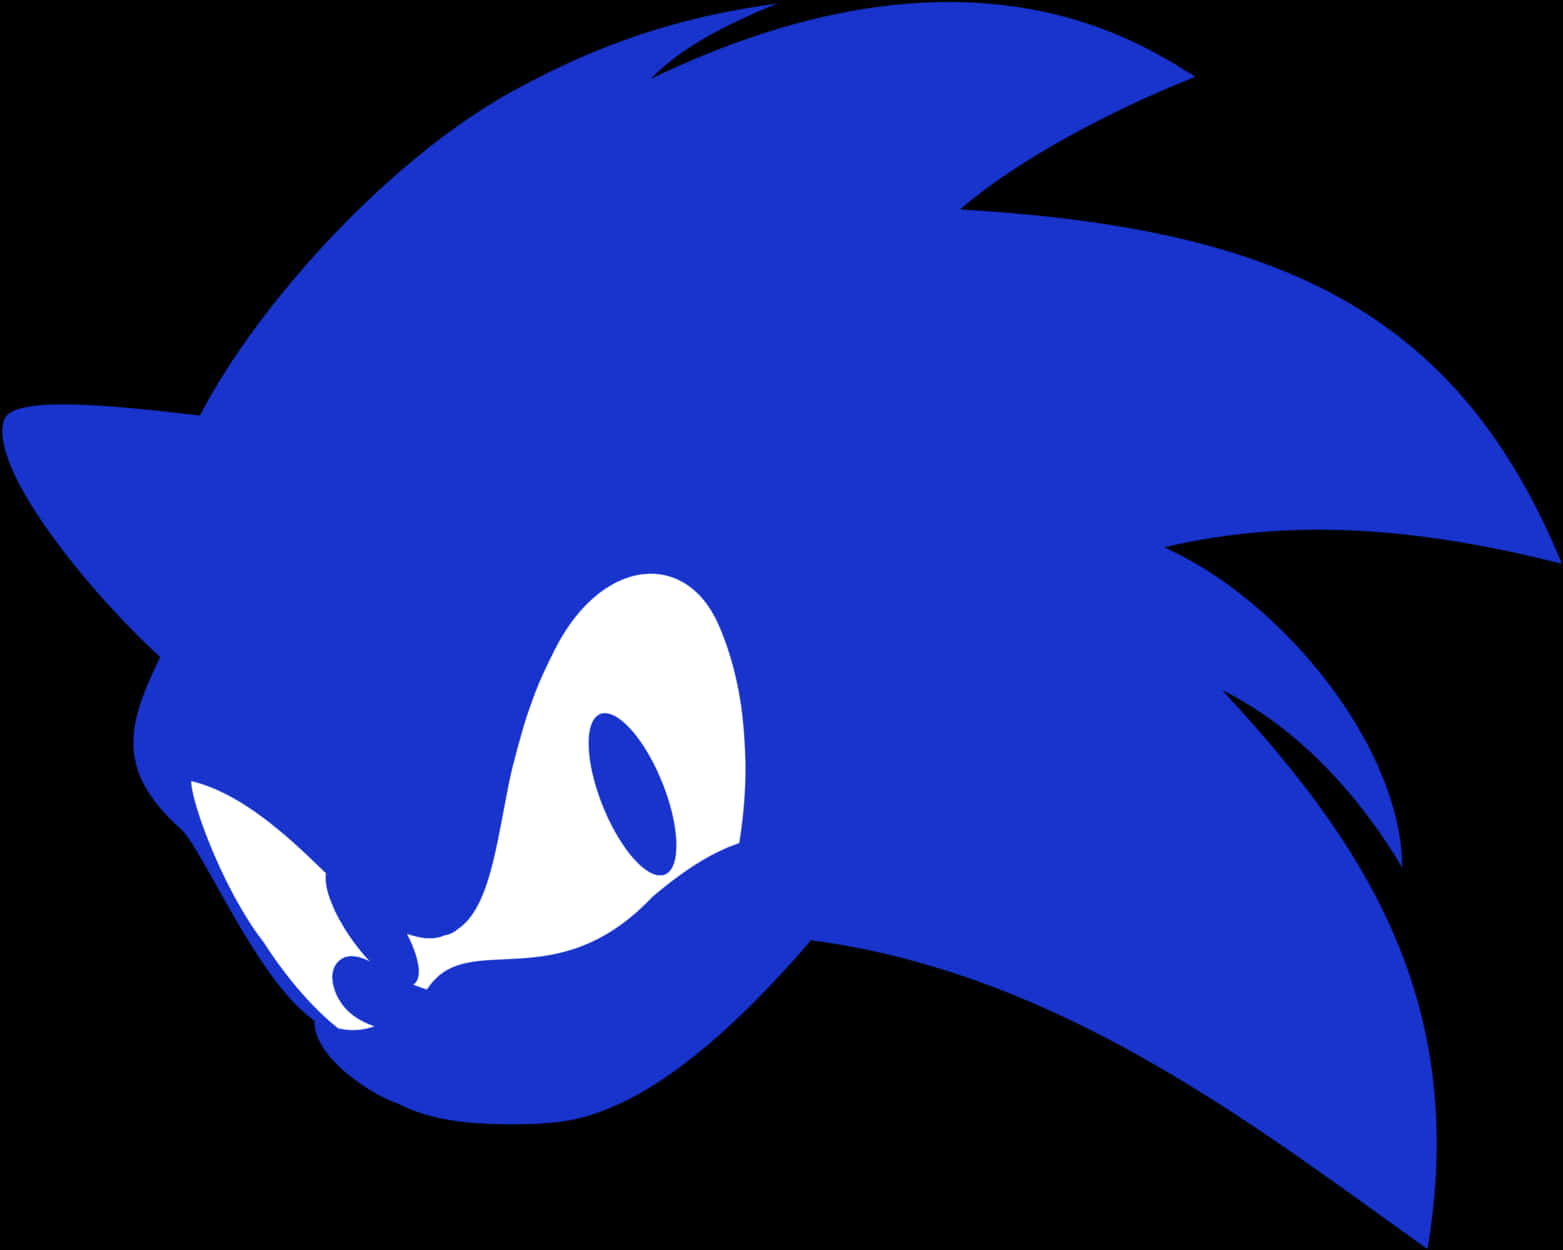 Blue Hedgehog Silhouette Graphic